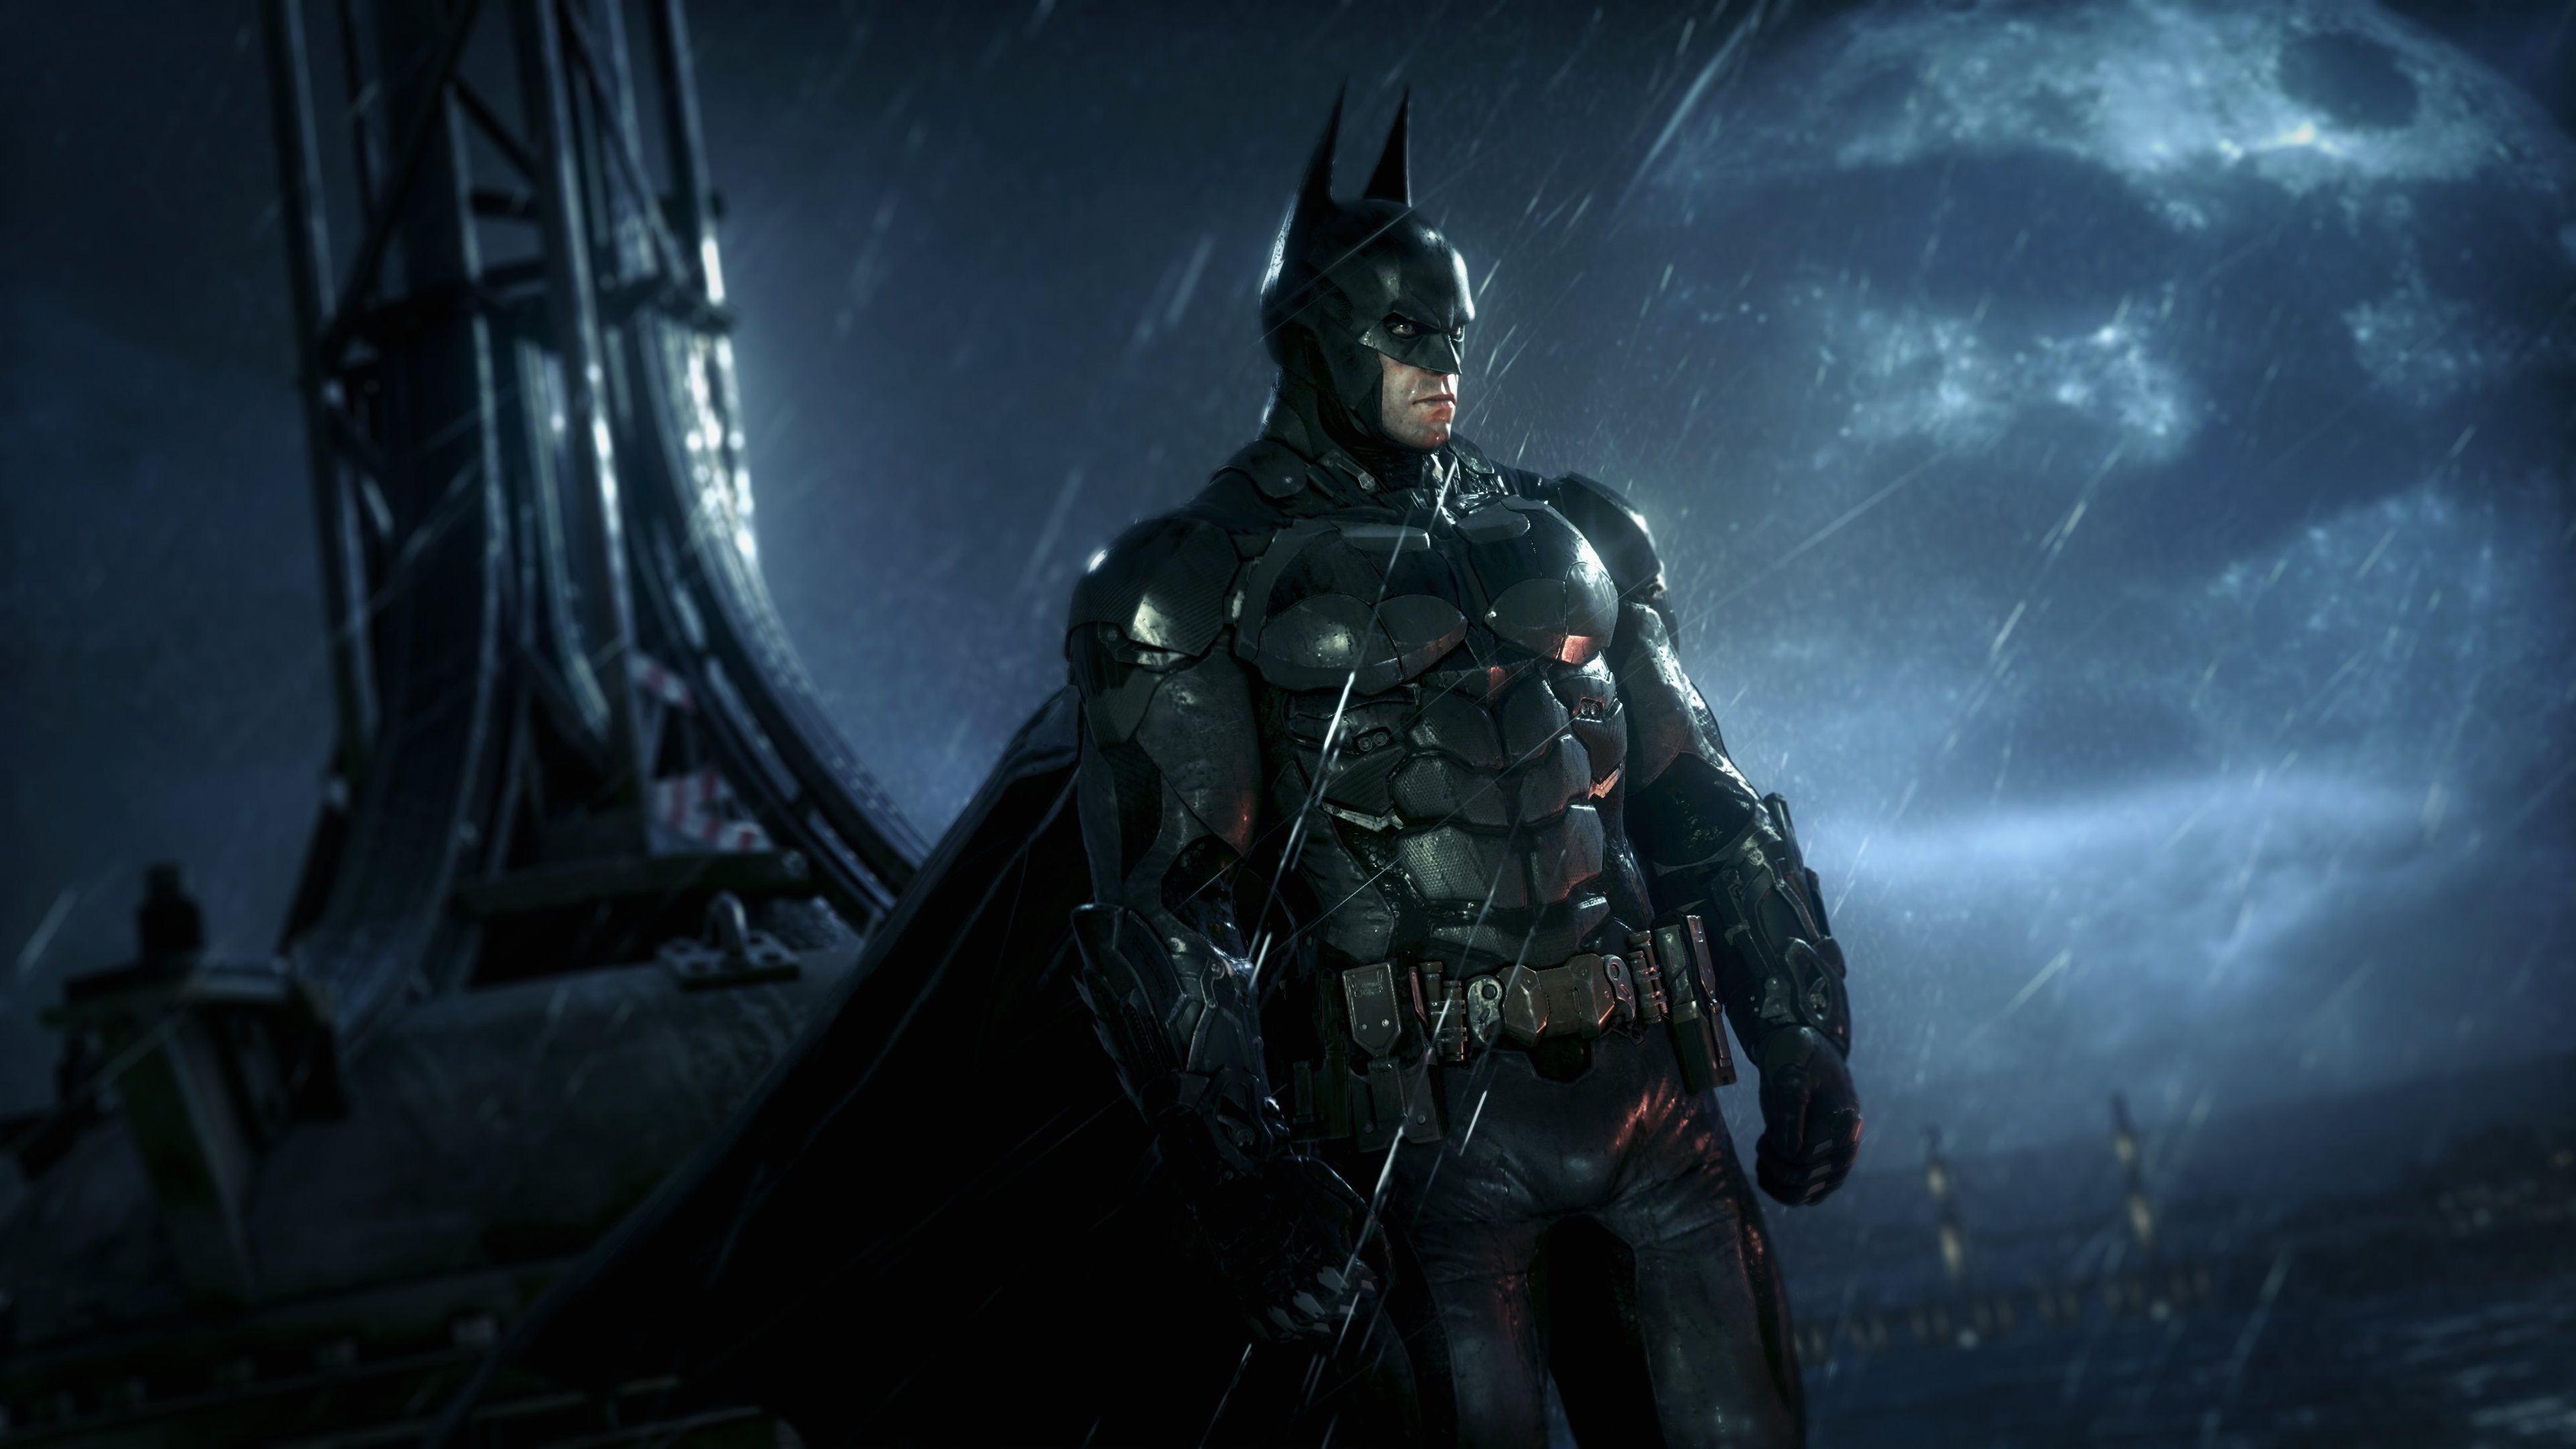 Wallpaper Batman: Arkham Knight, PS4 games, rainy night 3840x2160